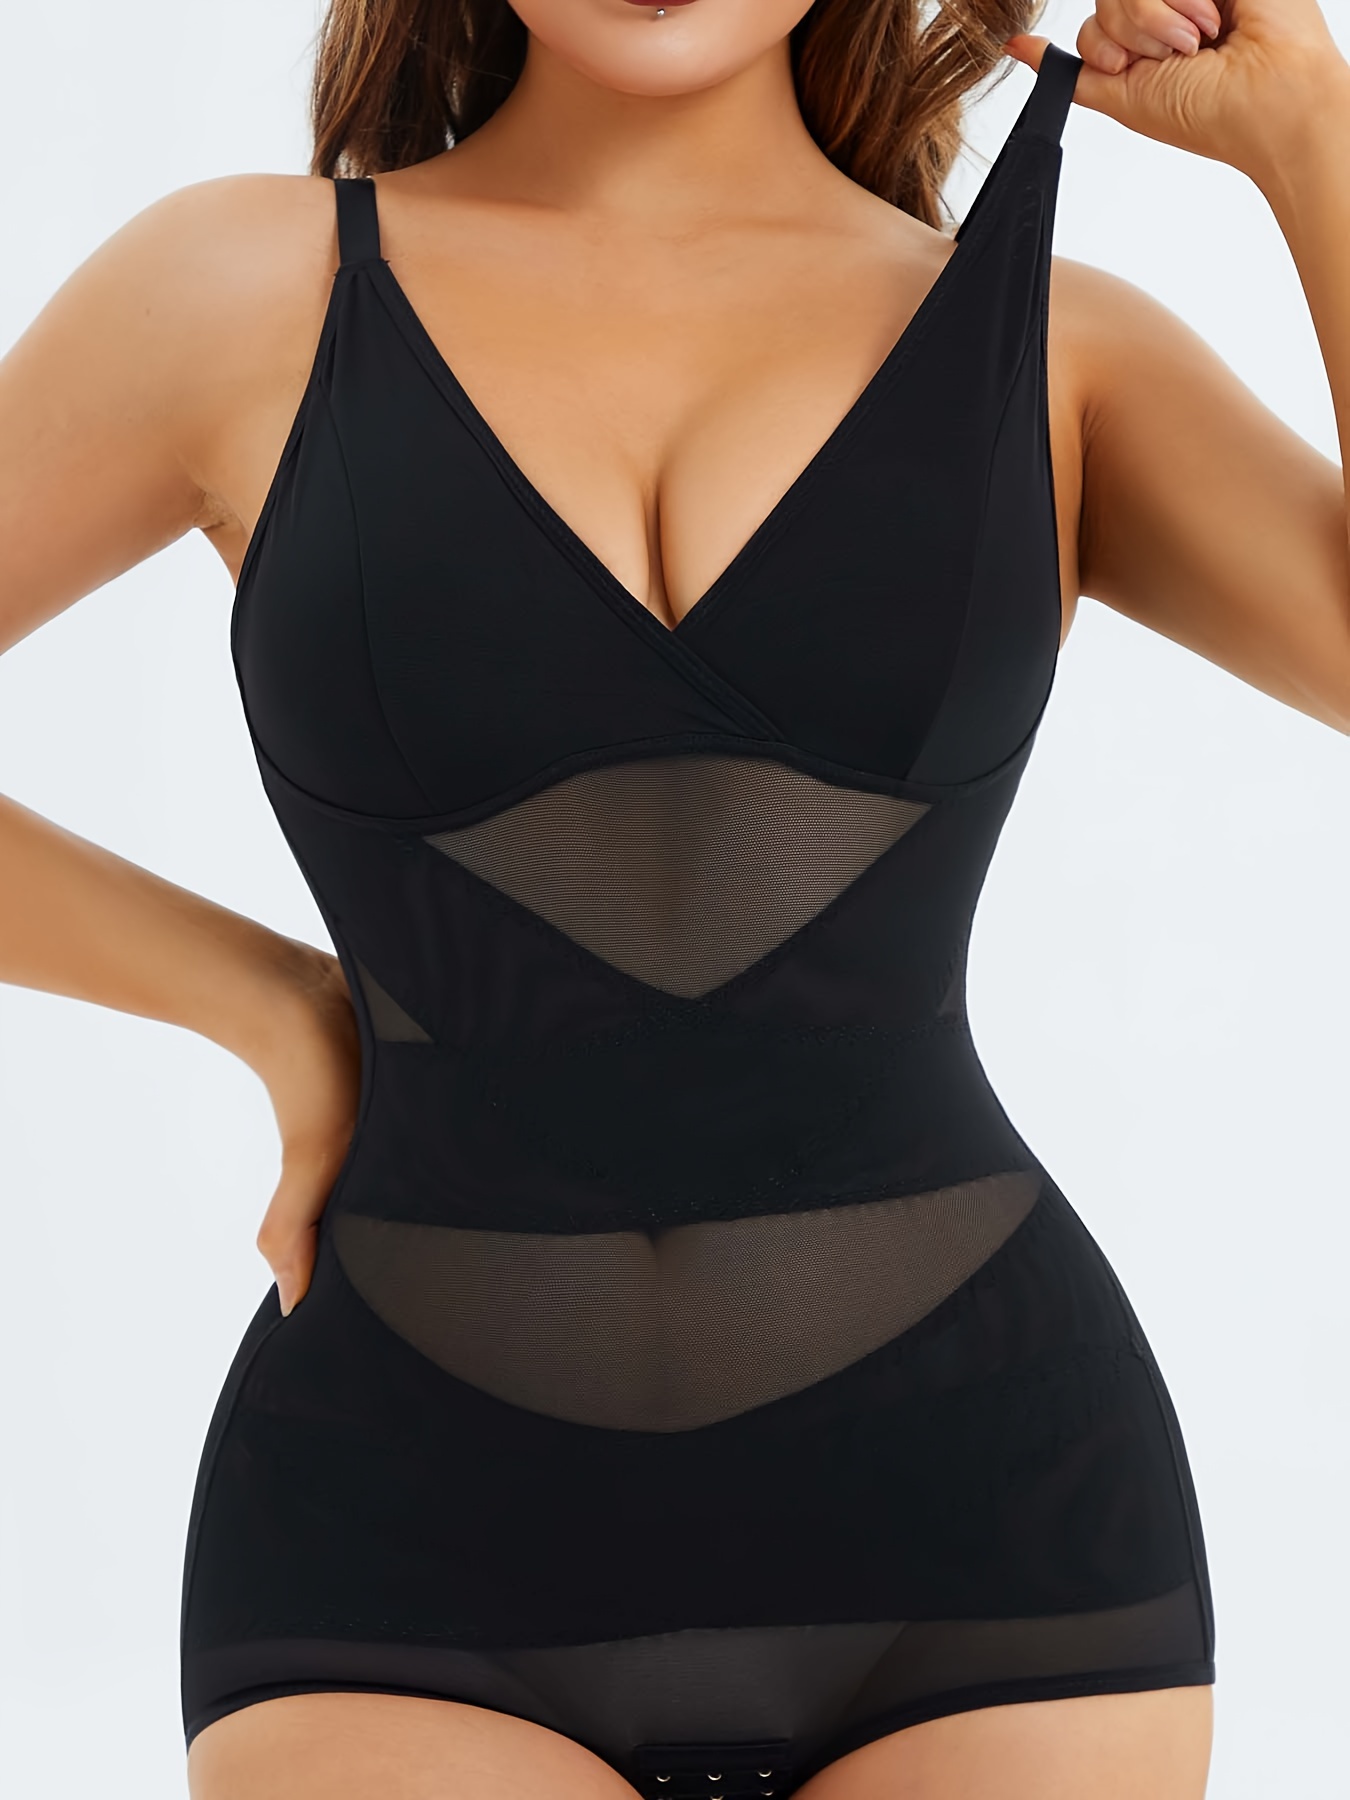 Fashion Beonlema Arm Women Body Bust Breasts Tops Posture Adjust Breast  Lift Shapewear Female XS-2XL @ Best Price Online